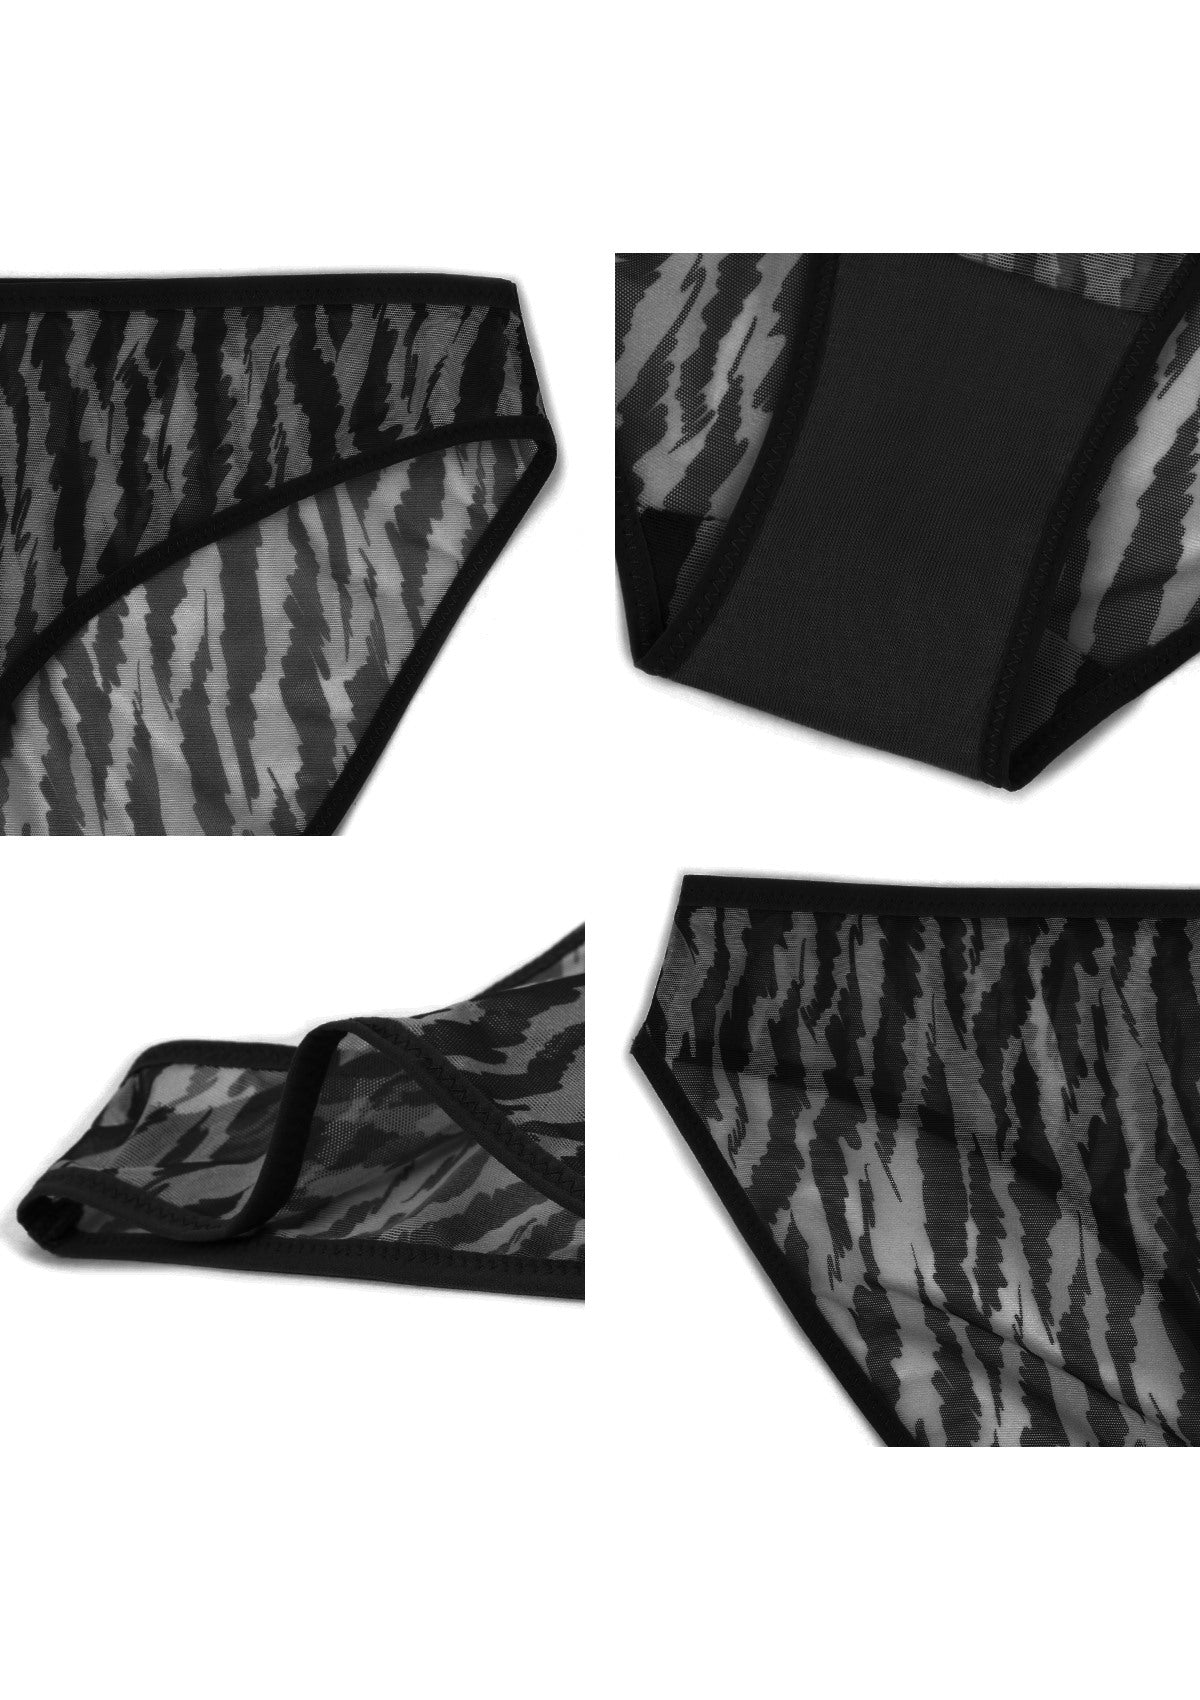 HSIA Breathable Sexy Feminine Lace Mesh Bikini Underwear - XXL / Black